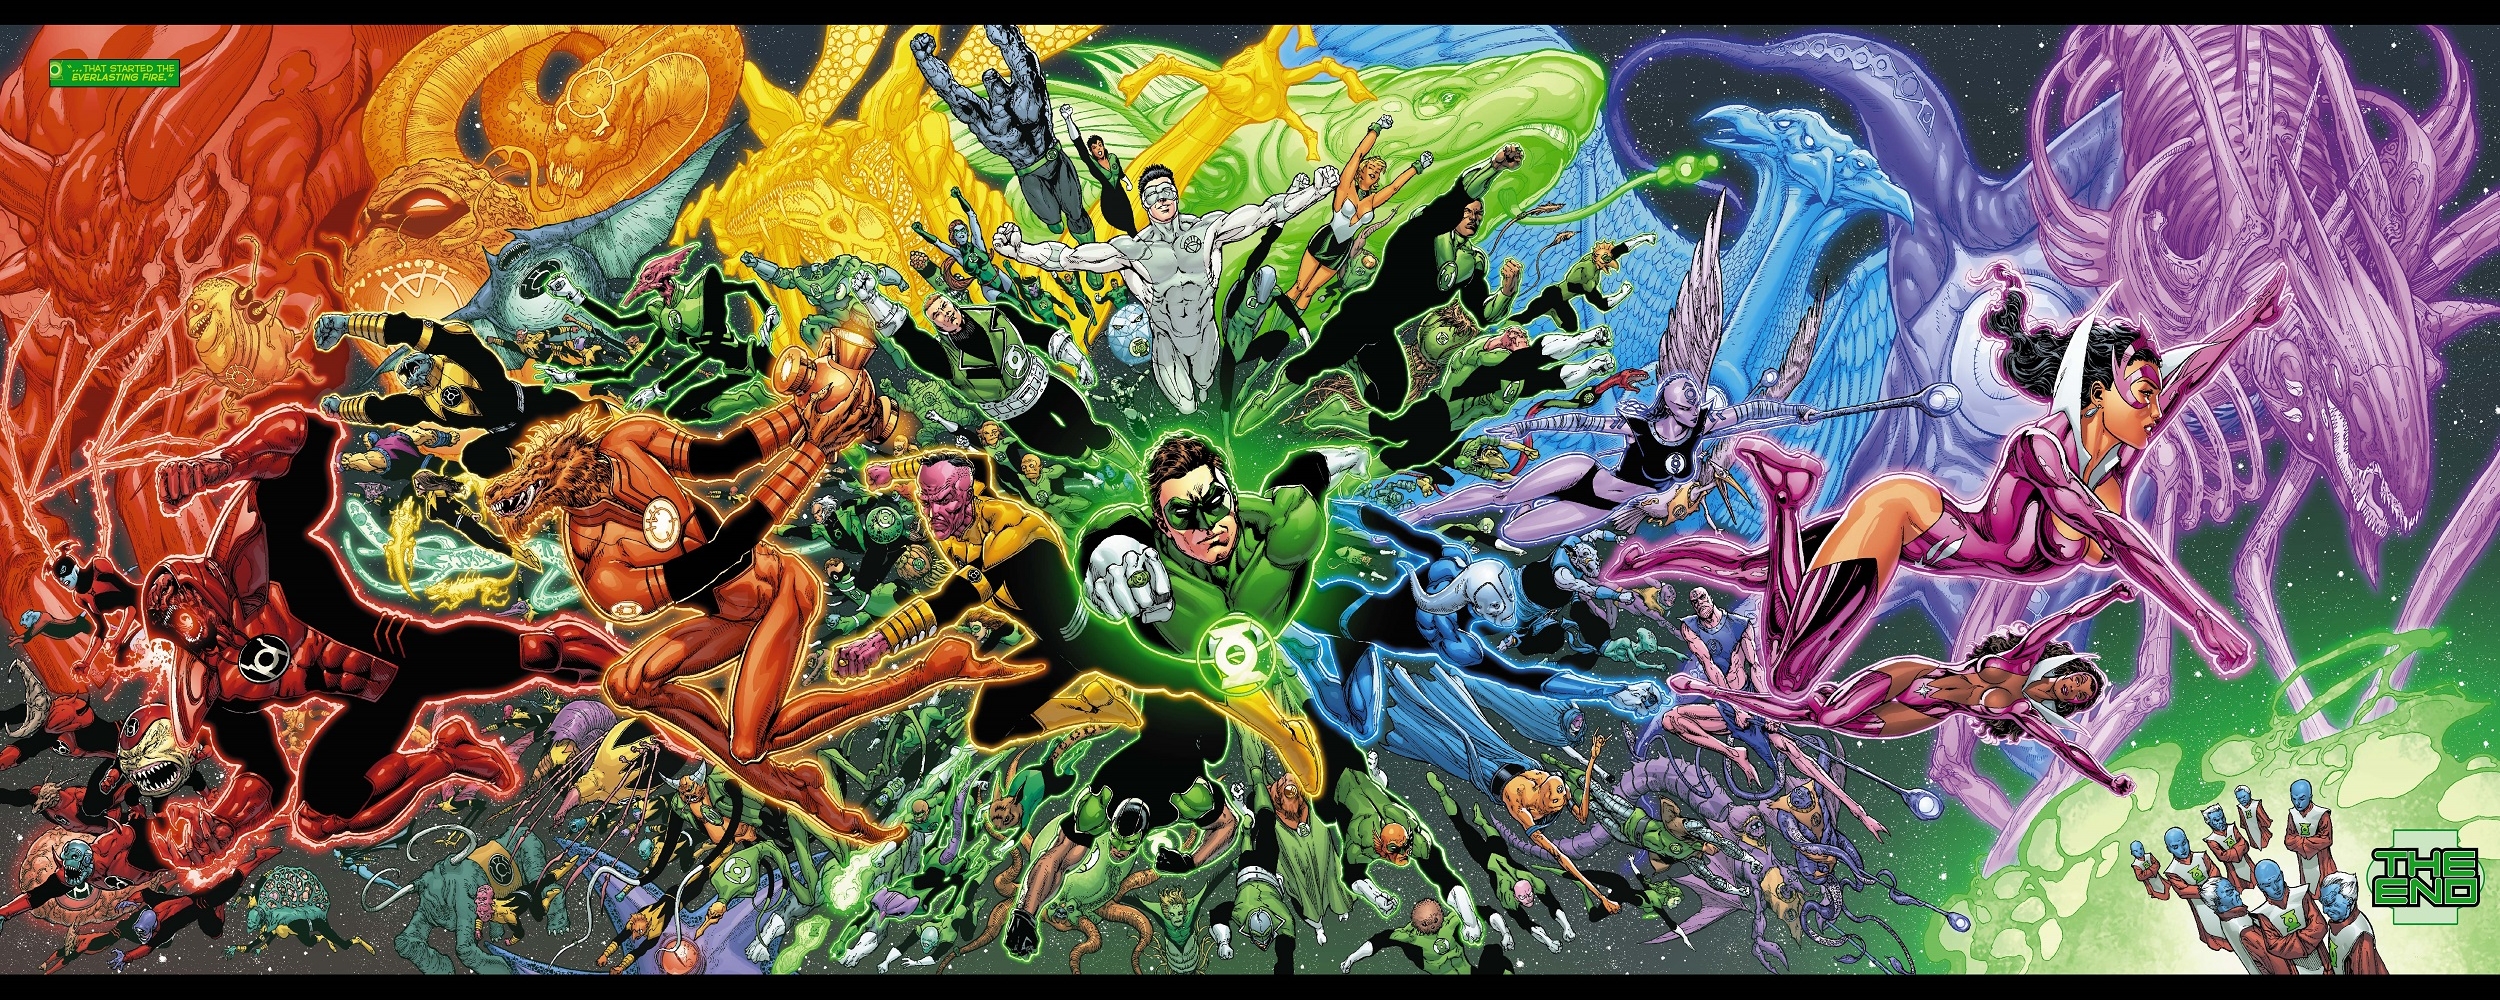 green lantern corps, comics, green lantern, superhero